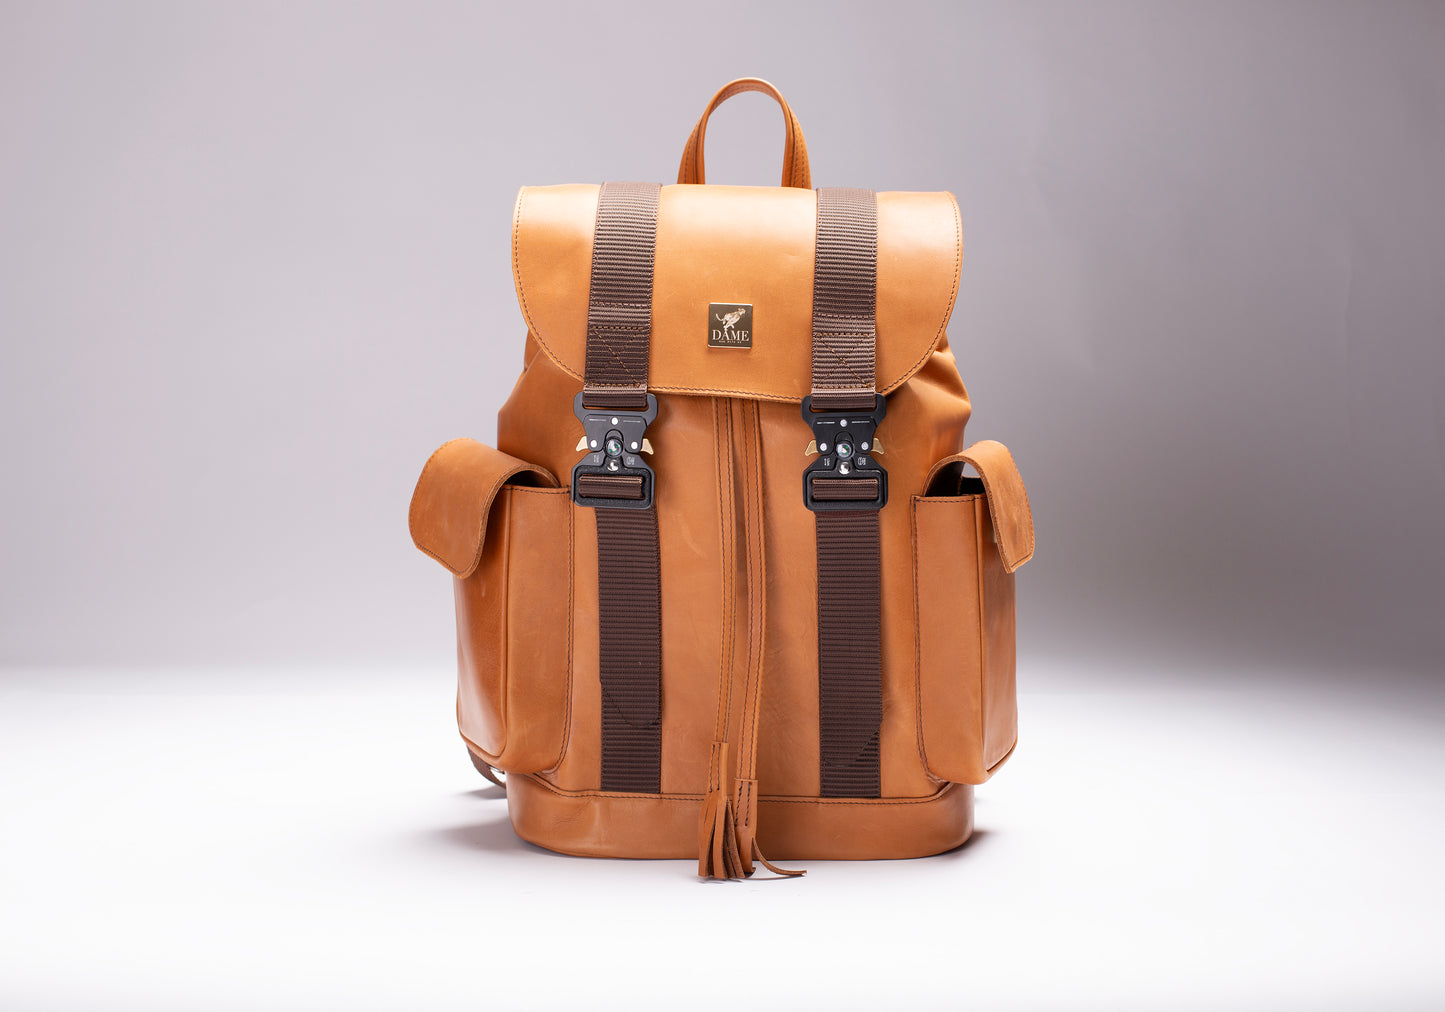 Look 5: The Audubon Backpack & The Regatta Handbag